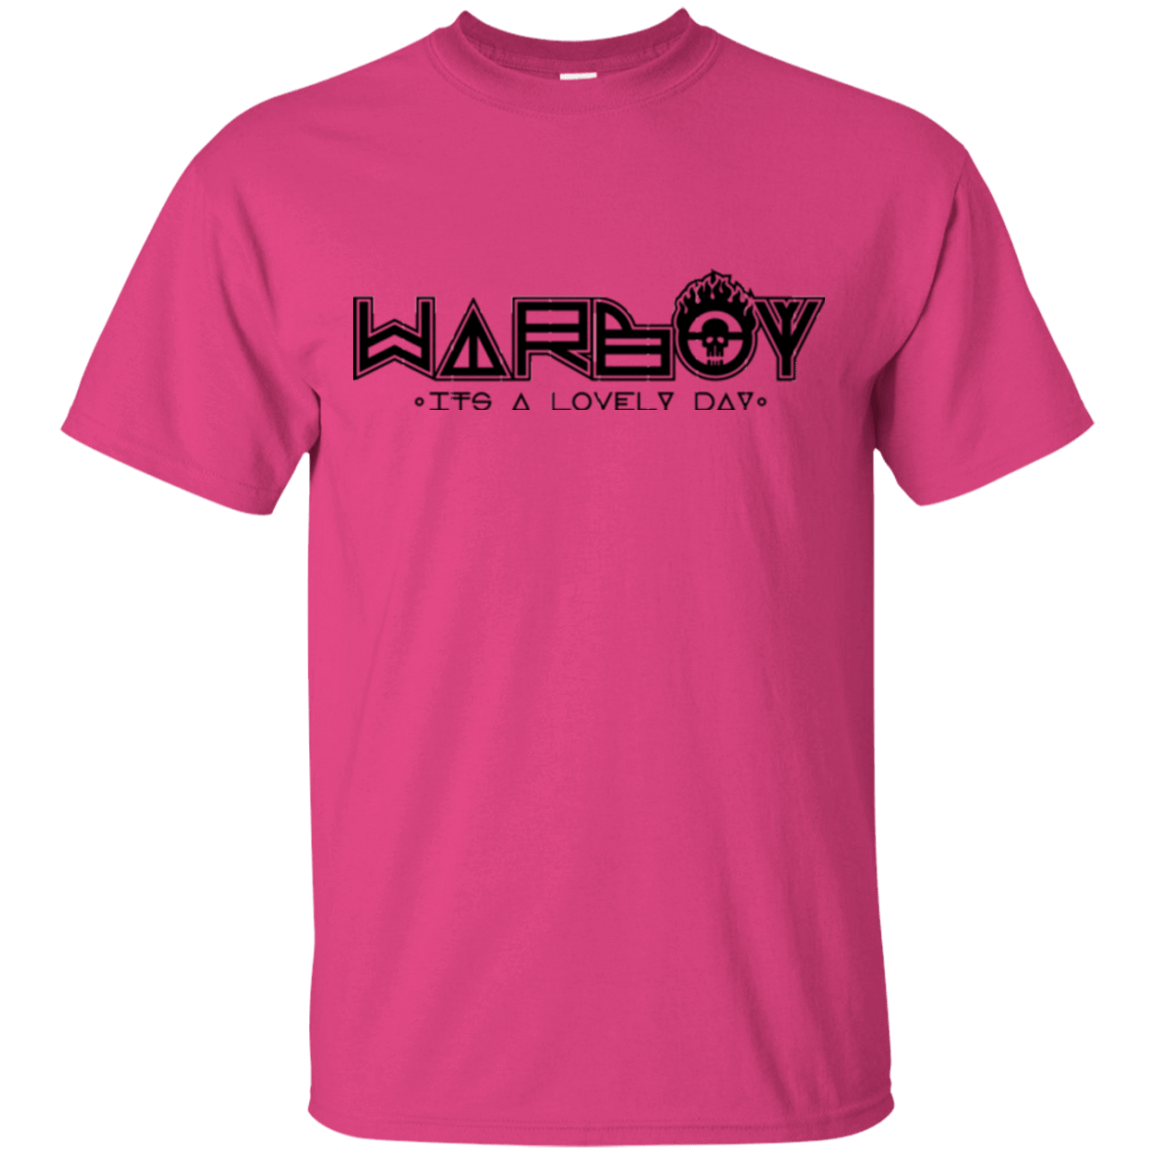 T-Shirts Heliconia / Small War Boy T-Shirt